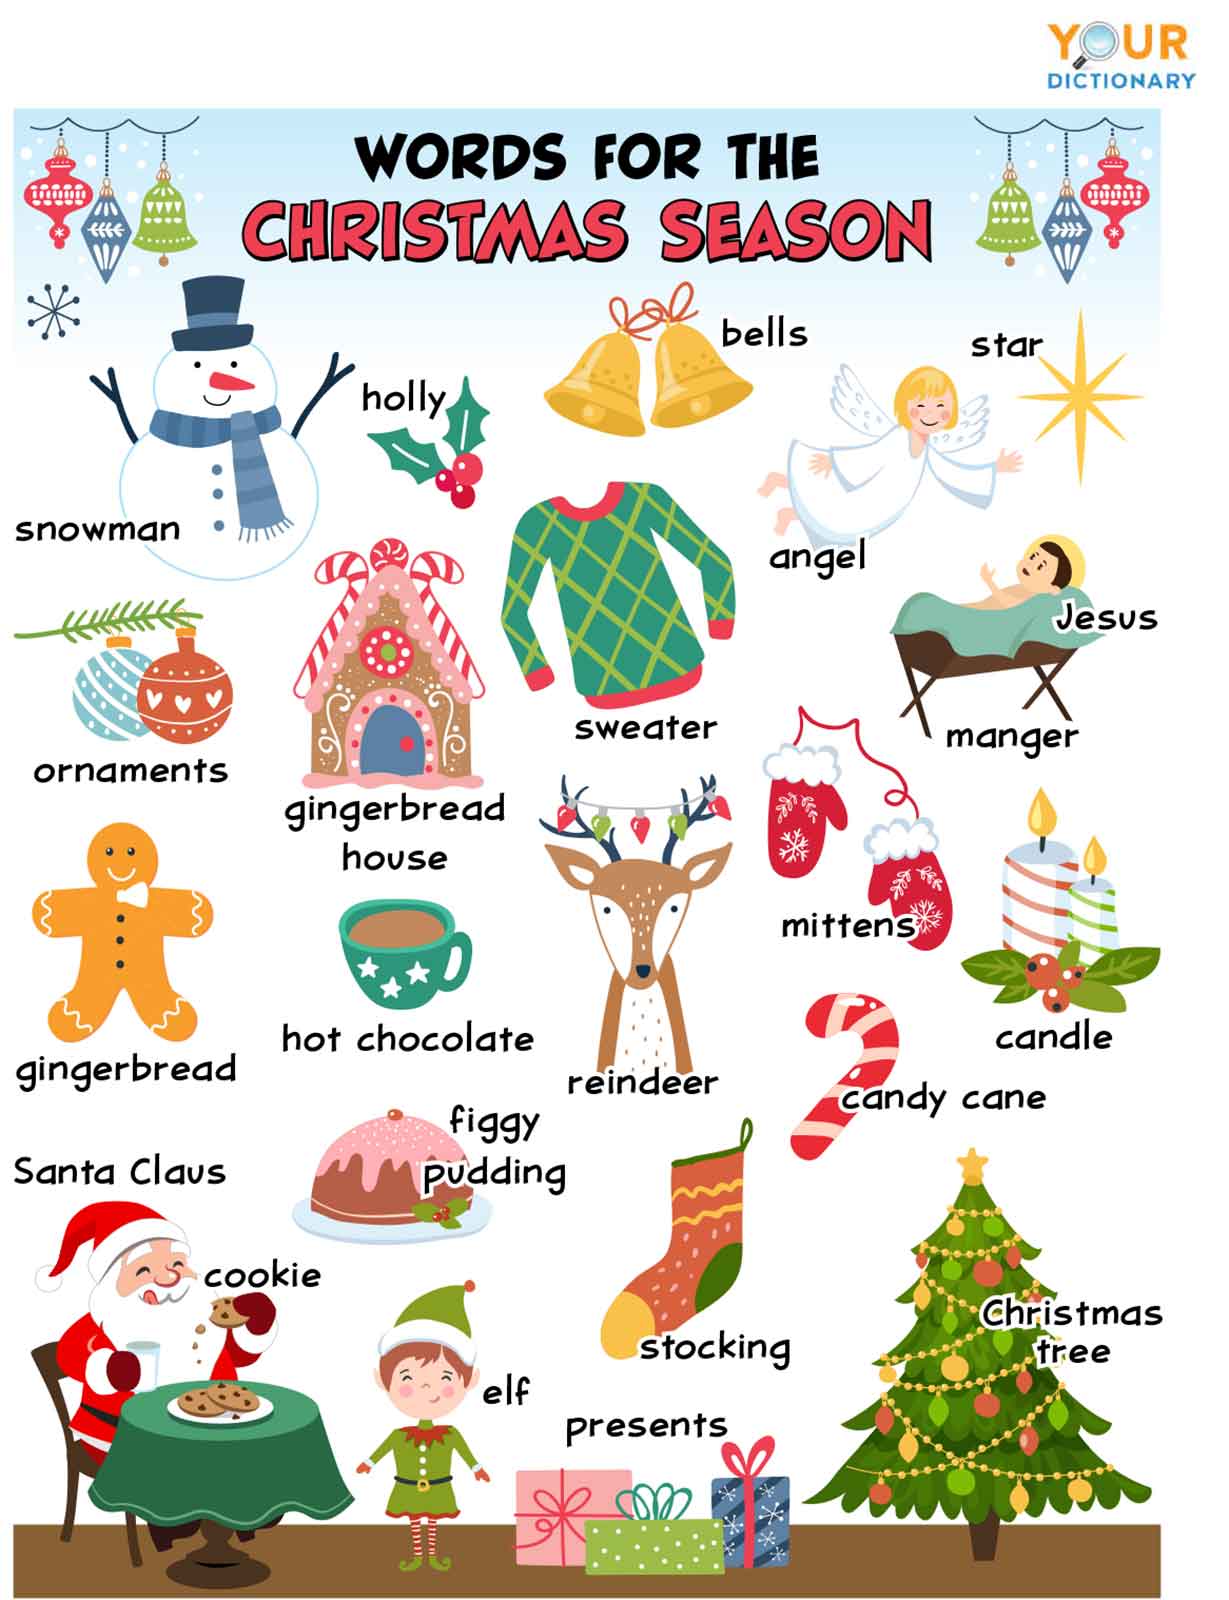 popular words for the Christmas season